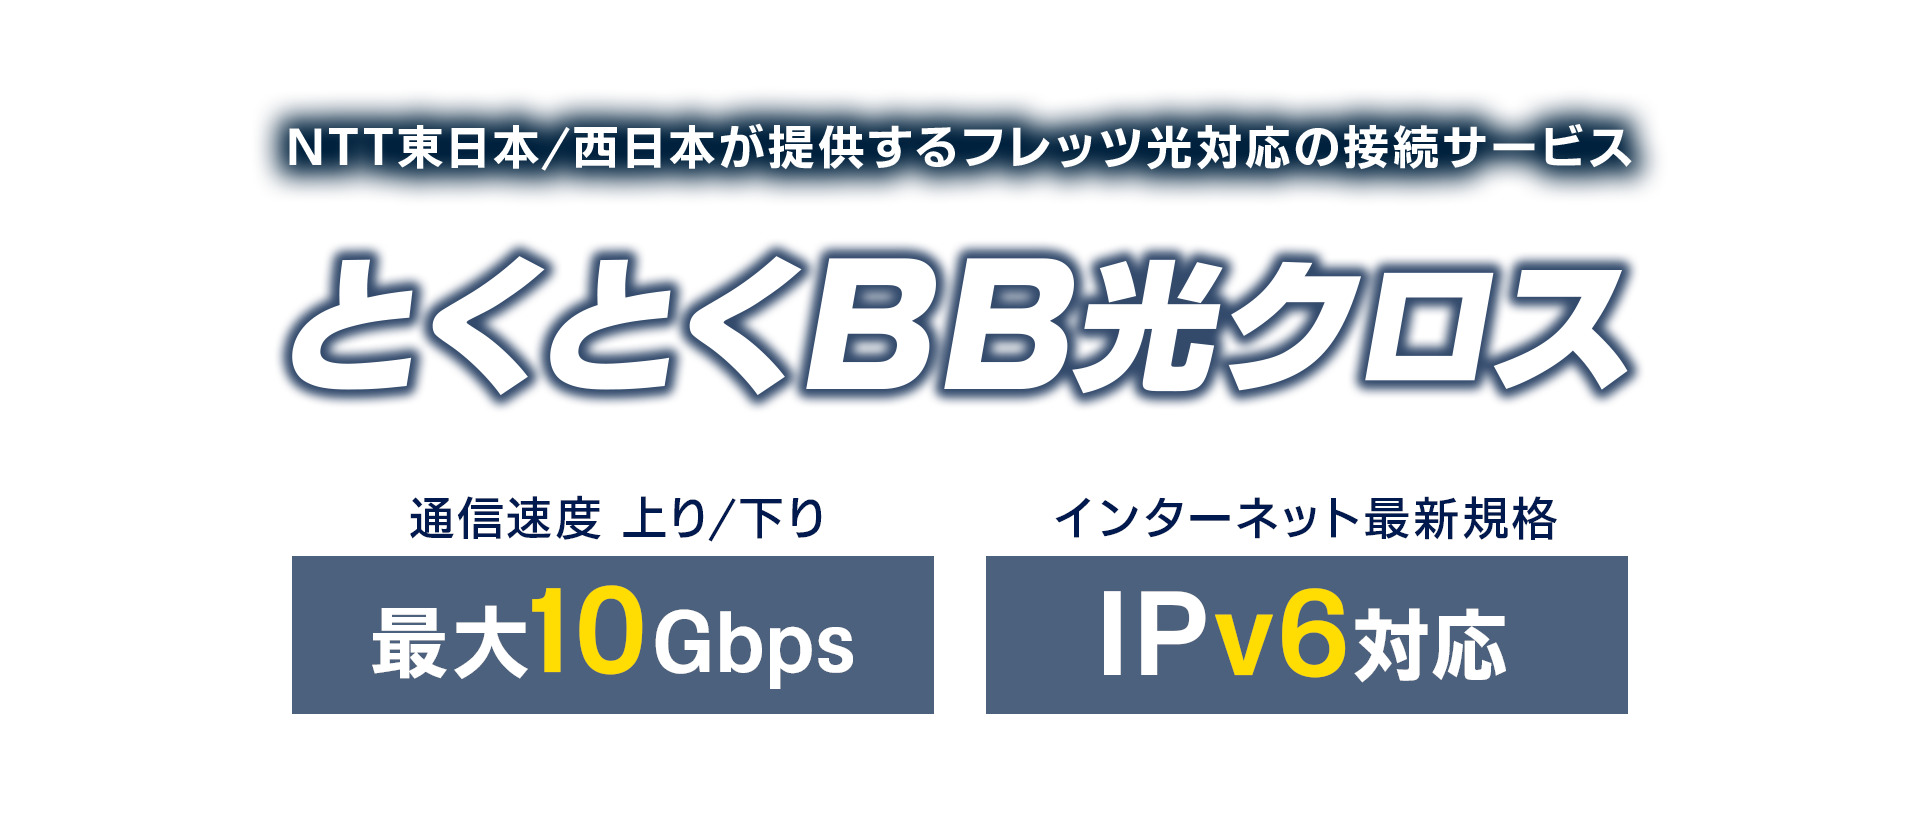 NTT東日本/西日本が提供するフレッツ光対応の接続サービス【とくとくBB光クロス】通信速度上り/下り最大10Gbps｜インターネット最新規格IPv6対応